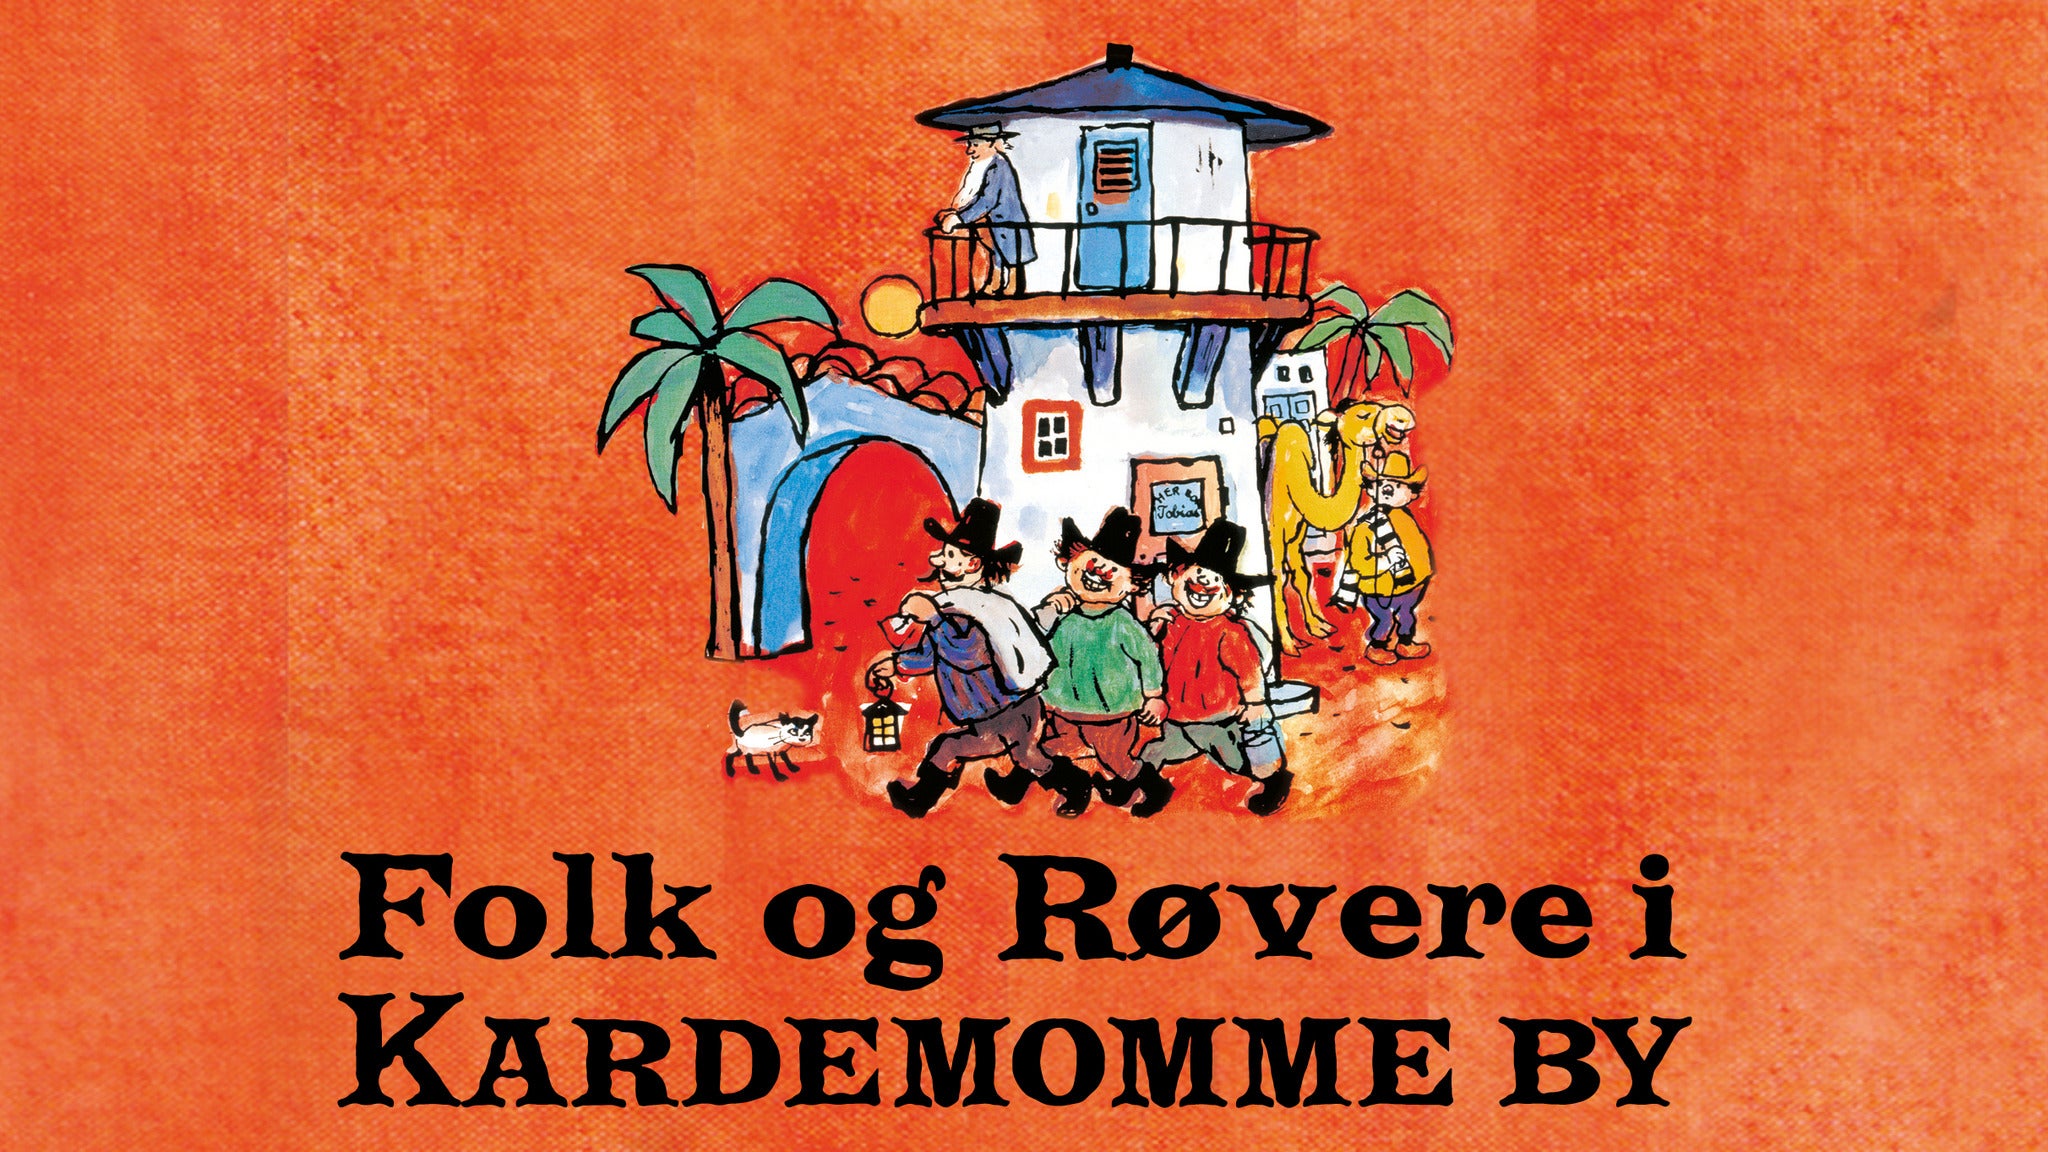 Folk Og Rovere I Kardemomme By presale information on freepresalepasswords.com